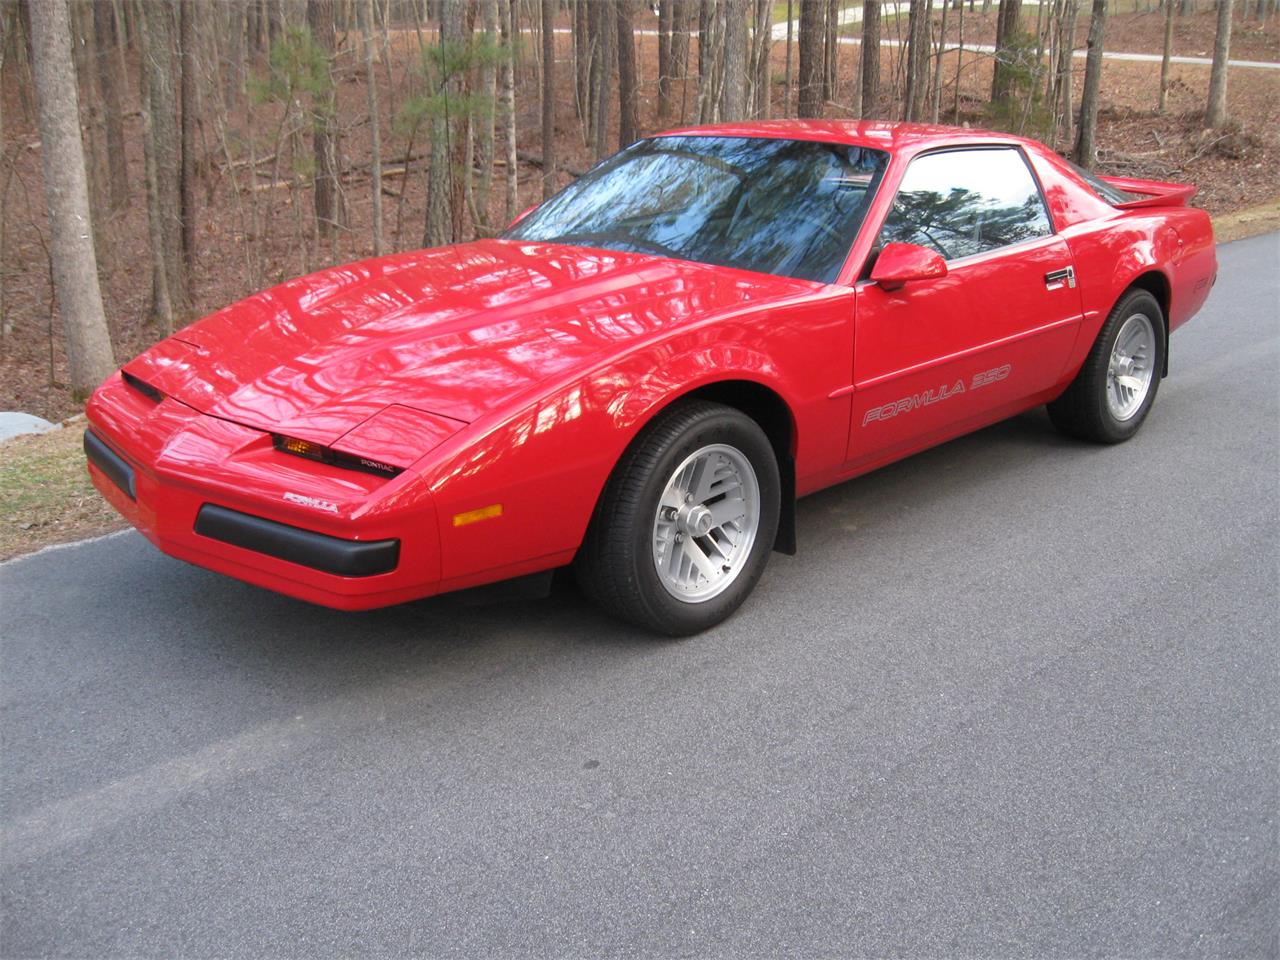 For Sale: 1990 Pontiac Firebird Formula in Princeton, Minnesota.